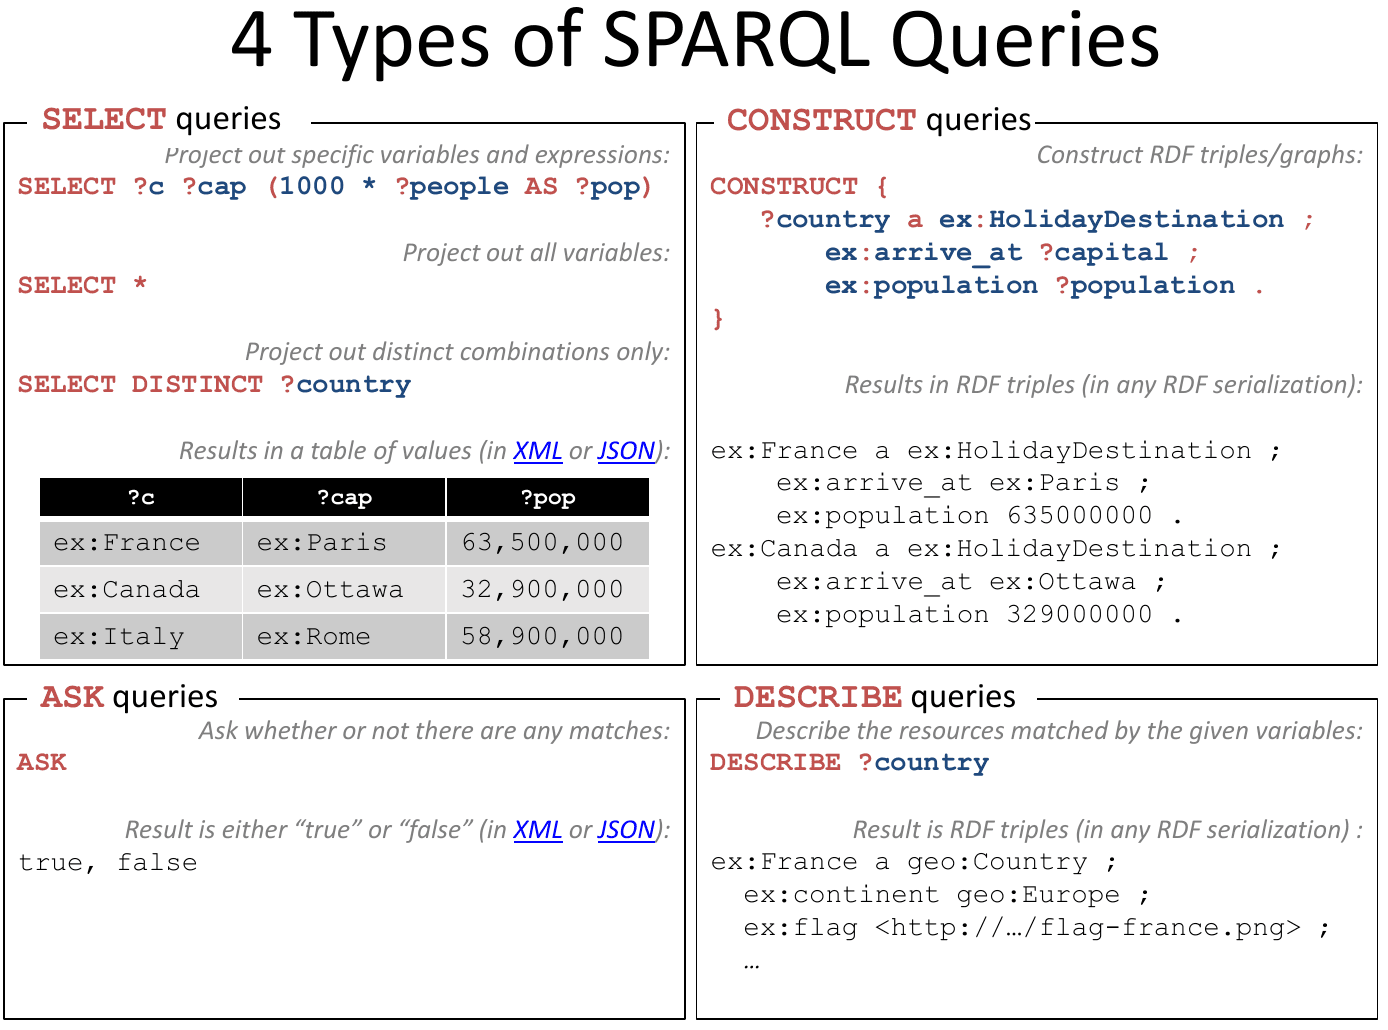 Four types of SPARQL queries